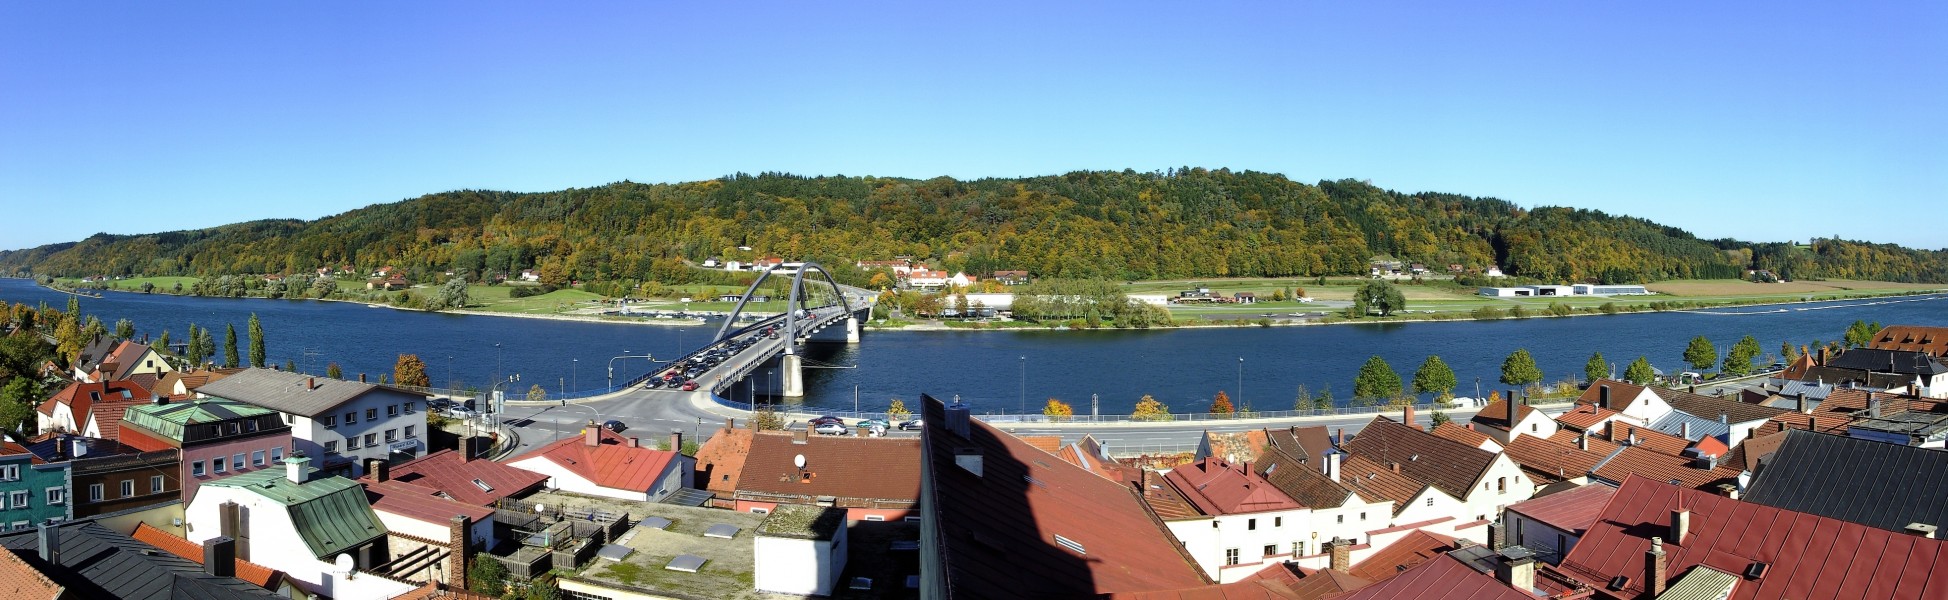 Panoramaaufnahme der Donau in Vilshofen